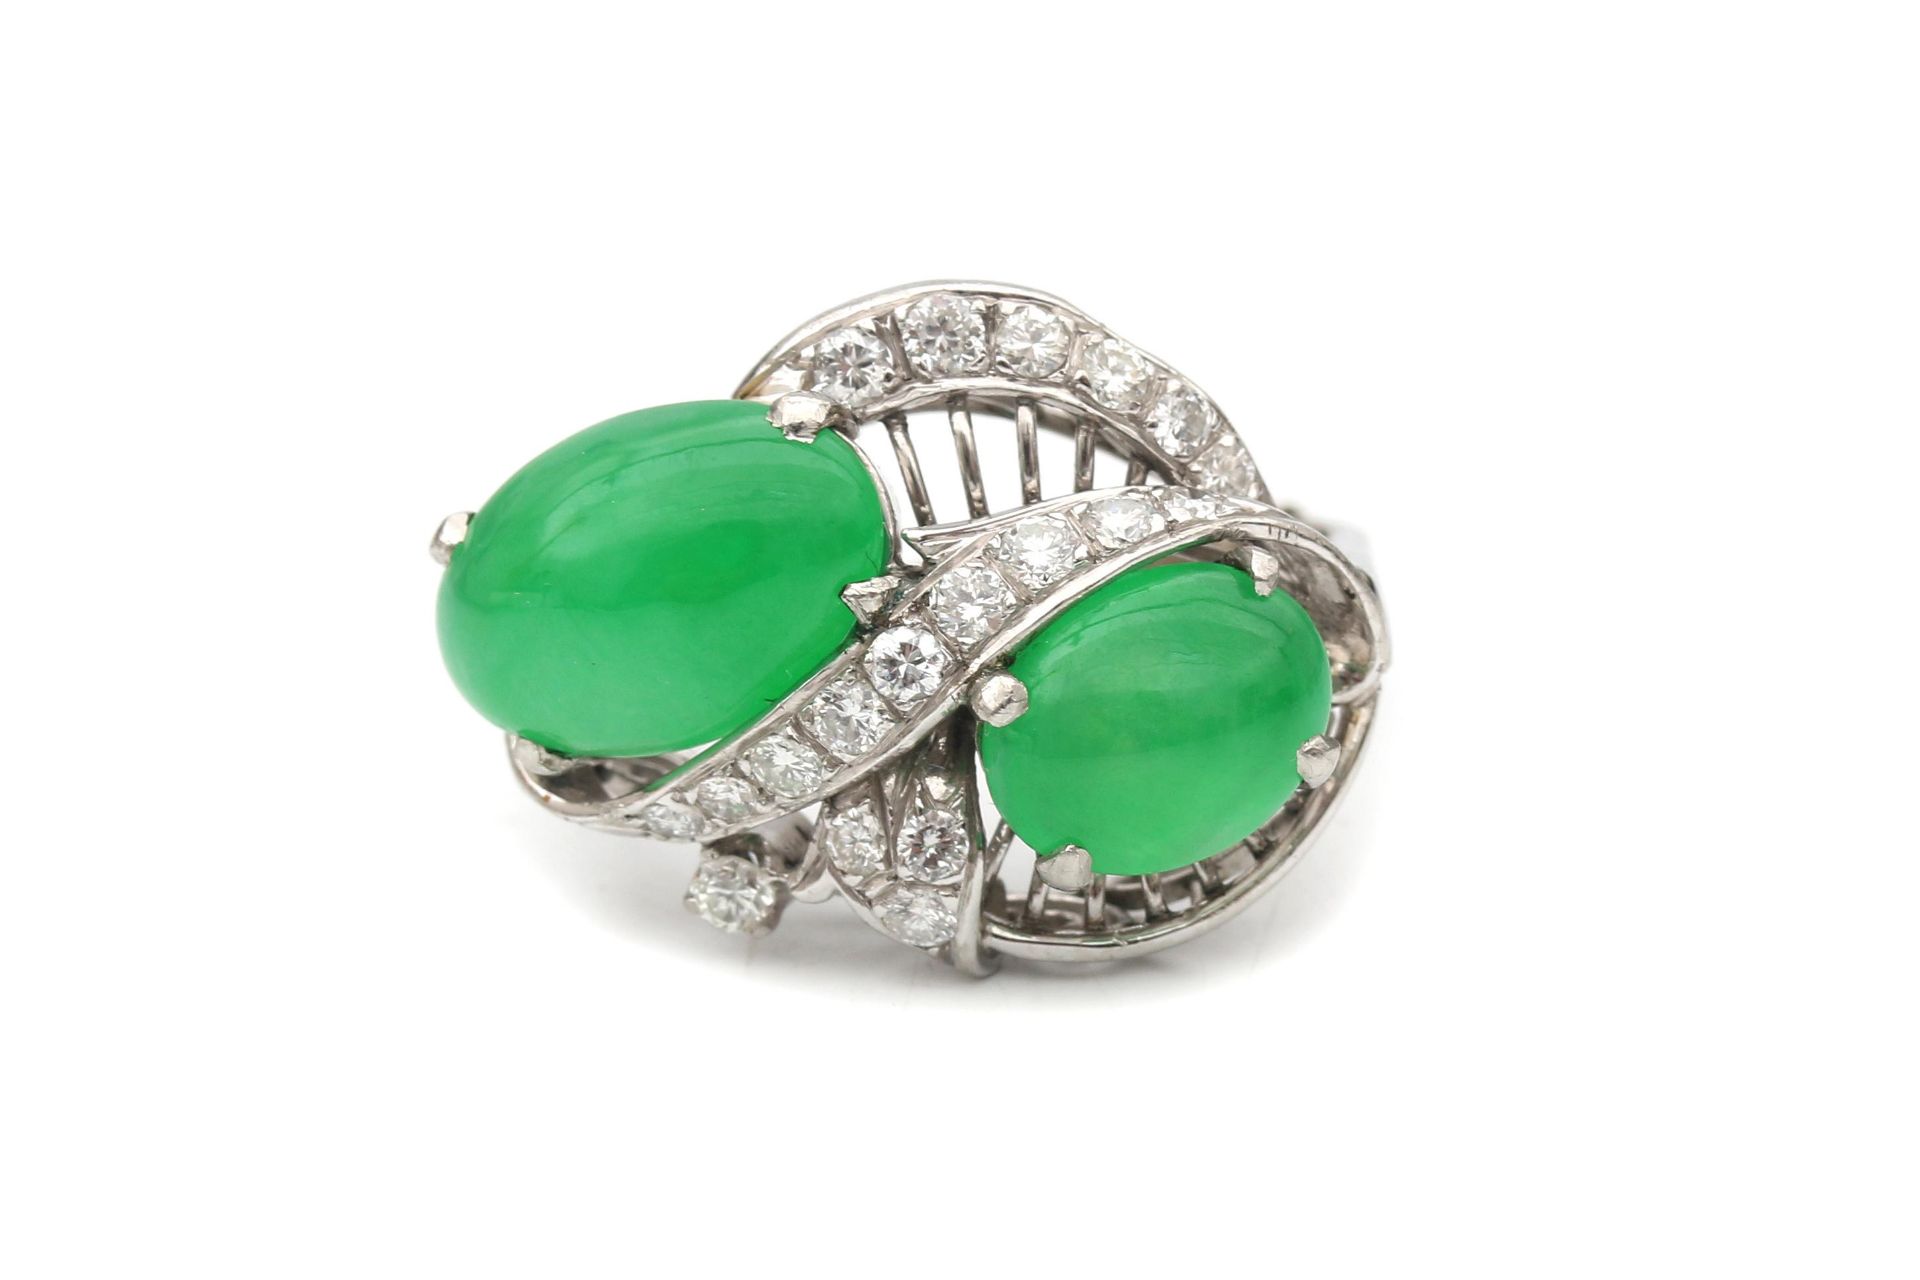 A platinum jade and diamond cocktail ring